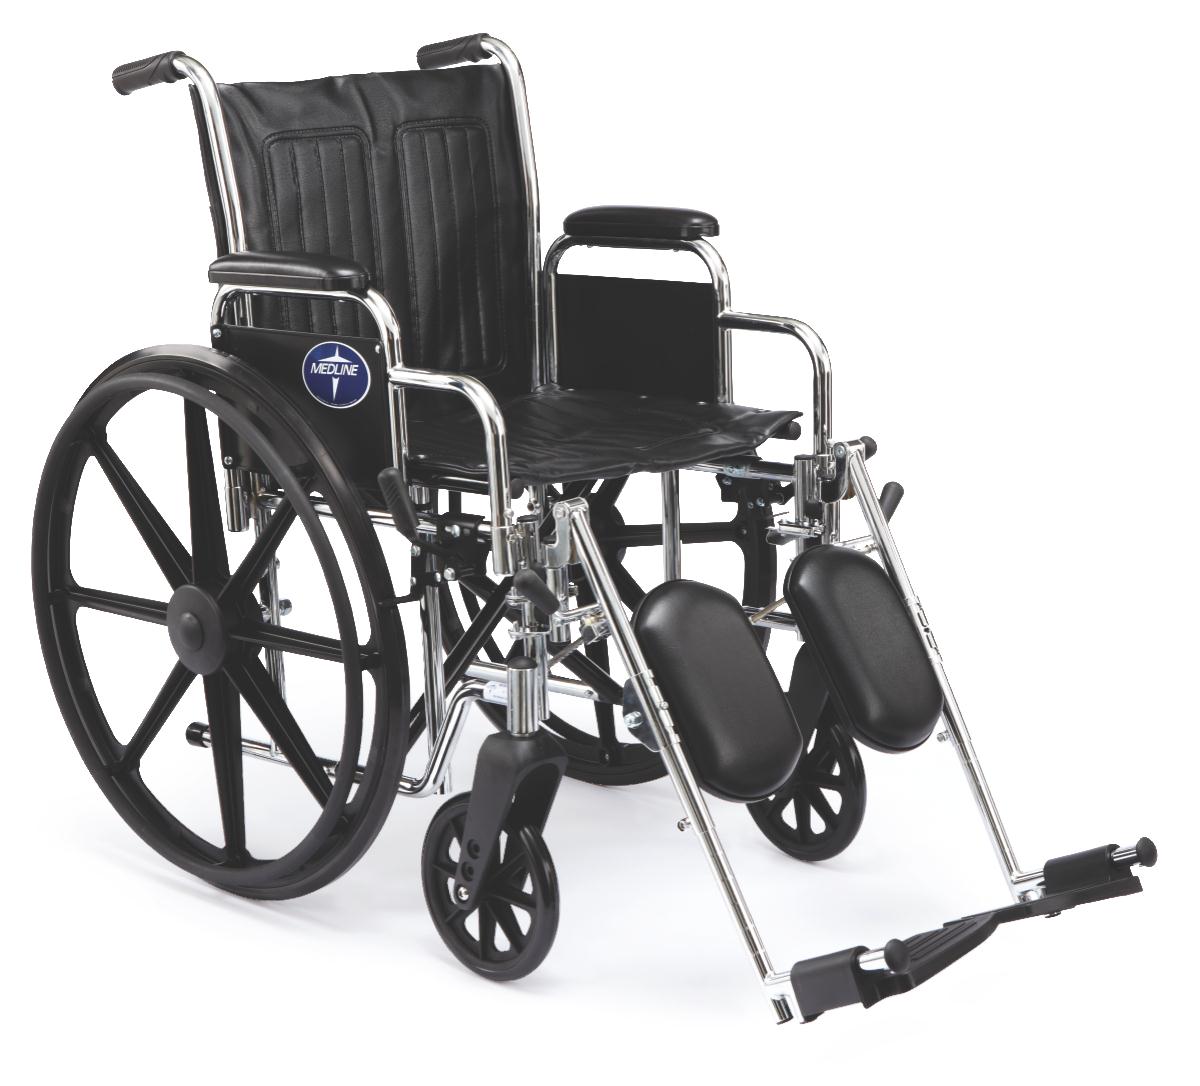 Medline 2000 Manual Wheelchair Parts